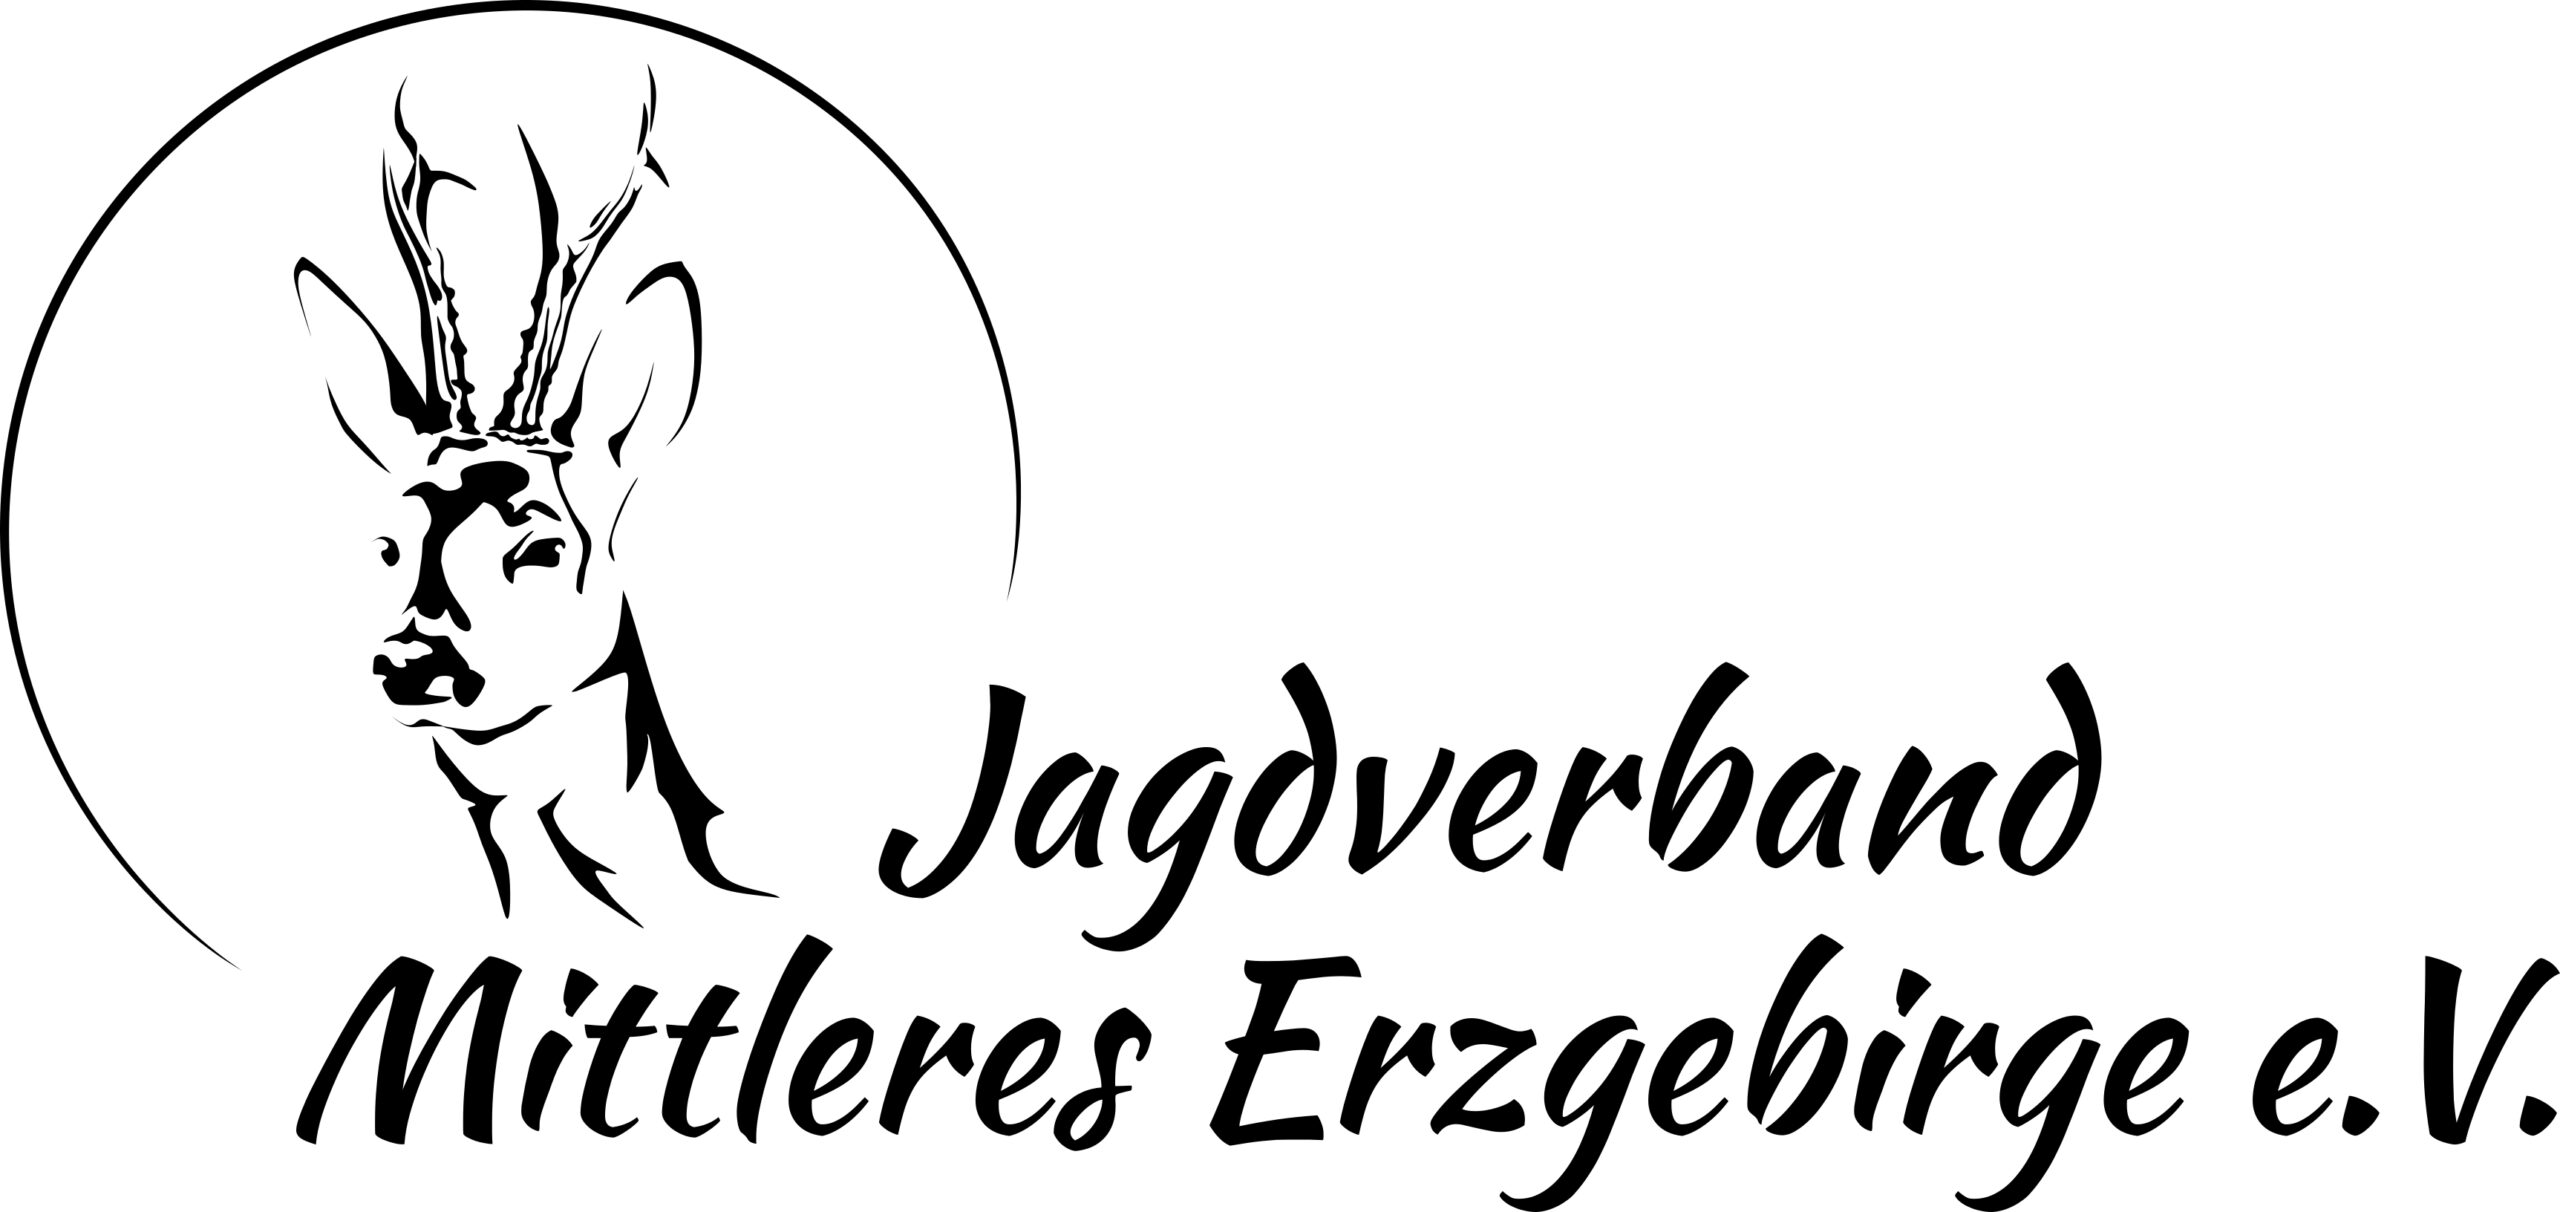 Logo Jagdverband Mittleres Erzgebrige